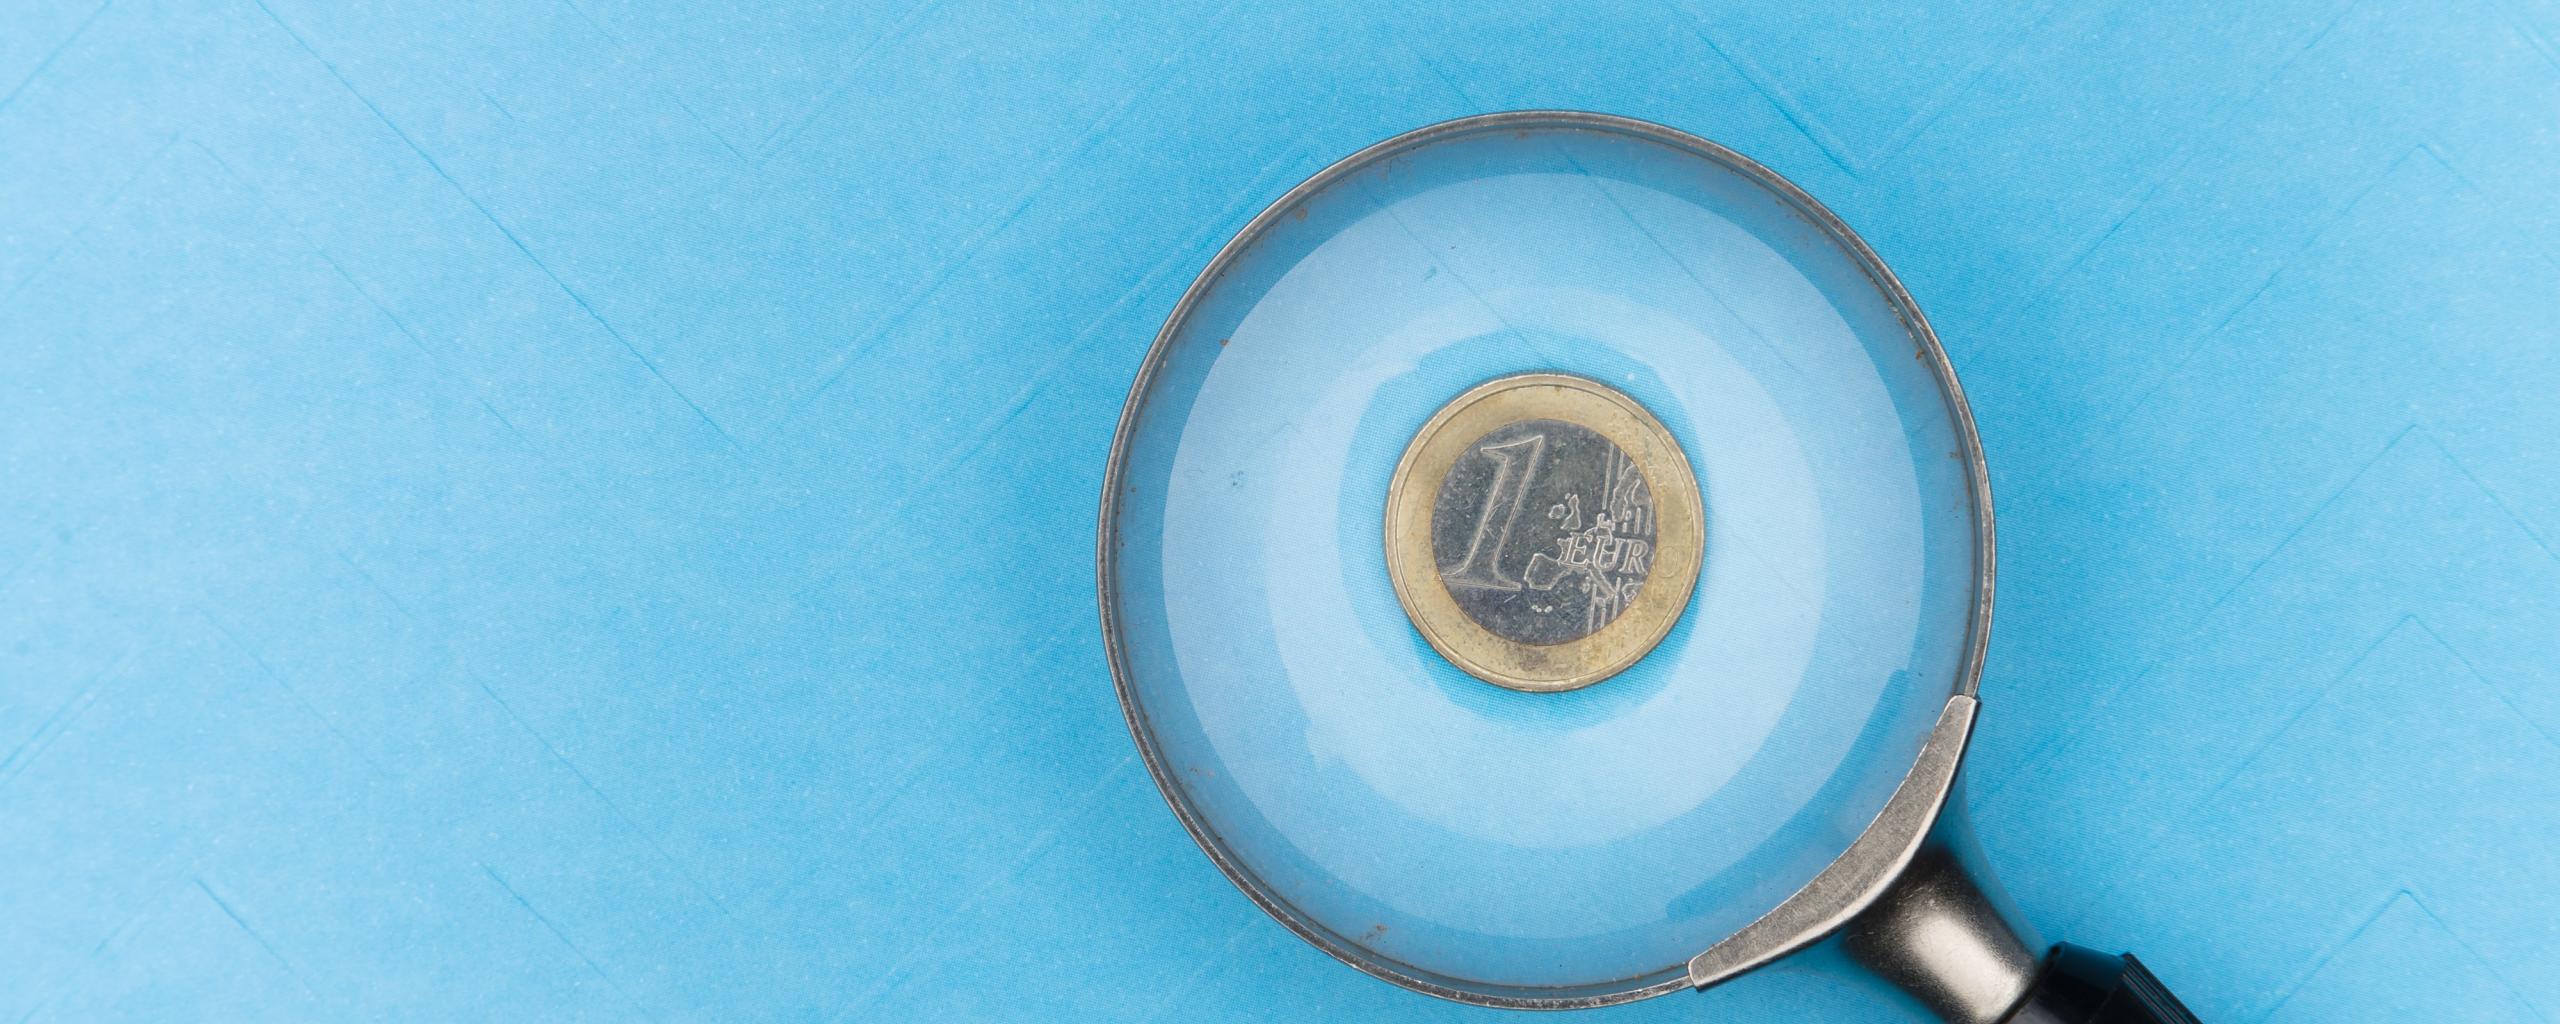 euromunt onder vergrootglas